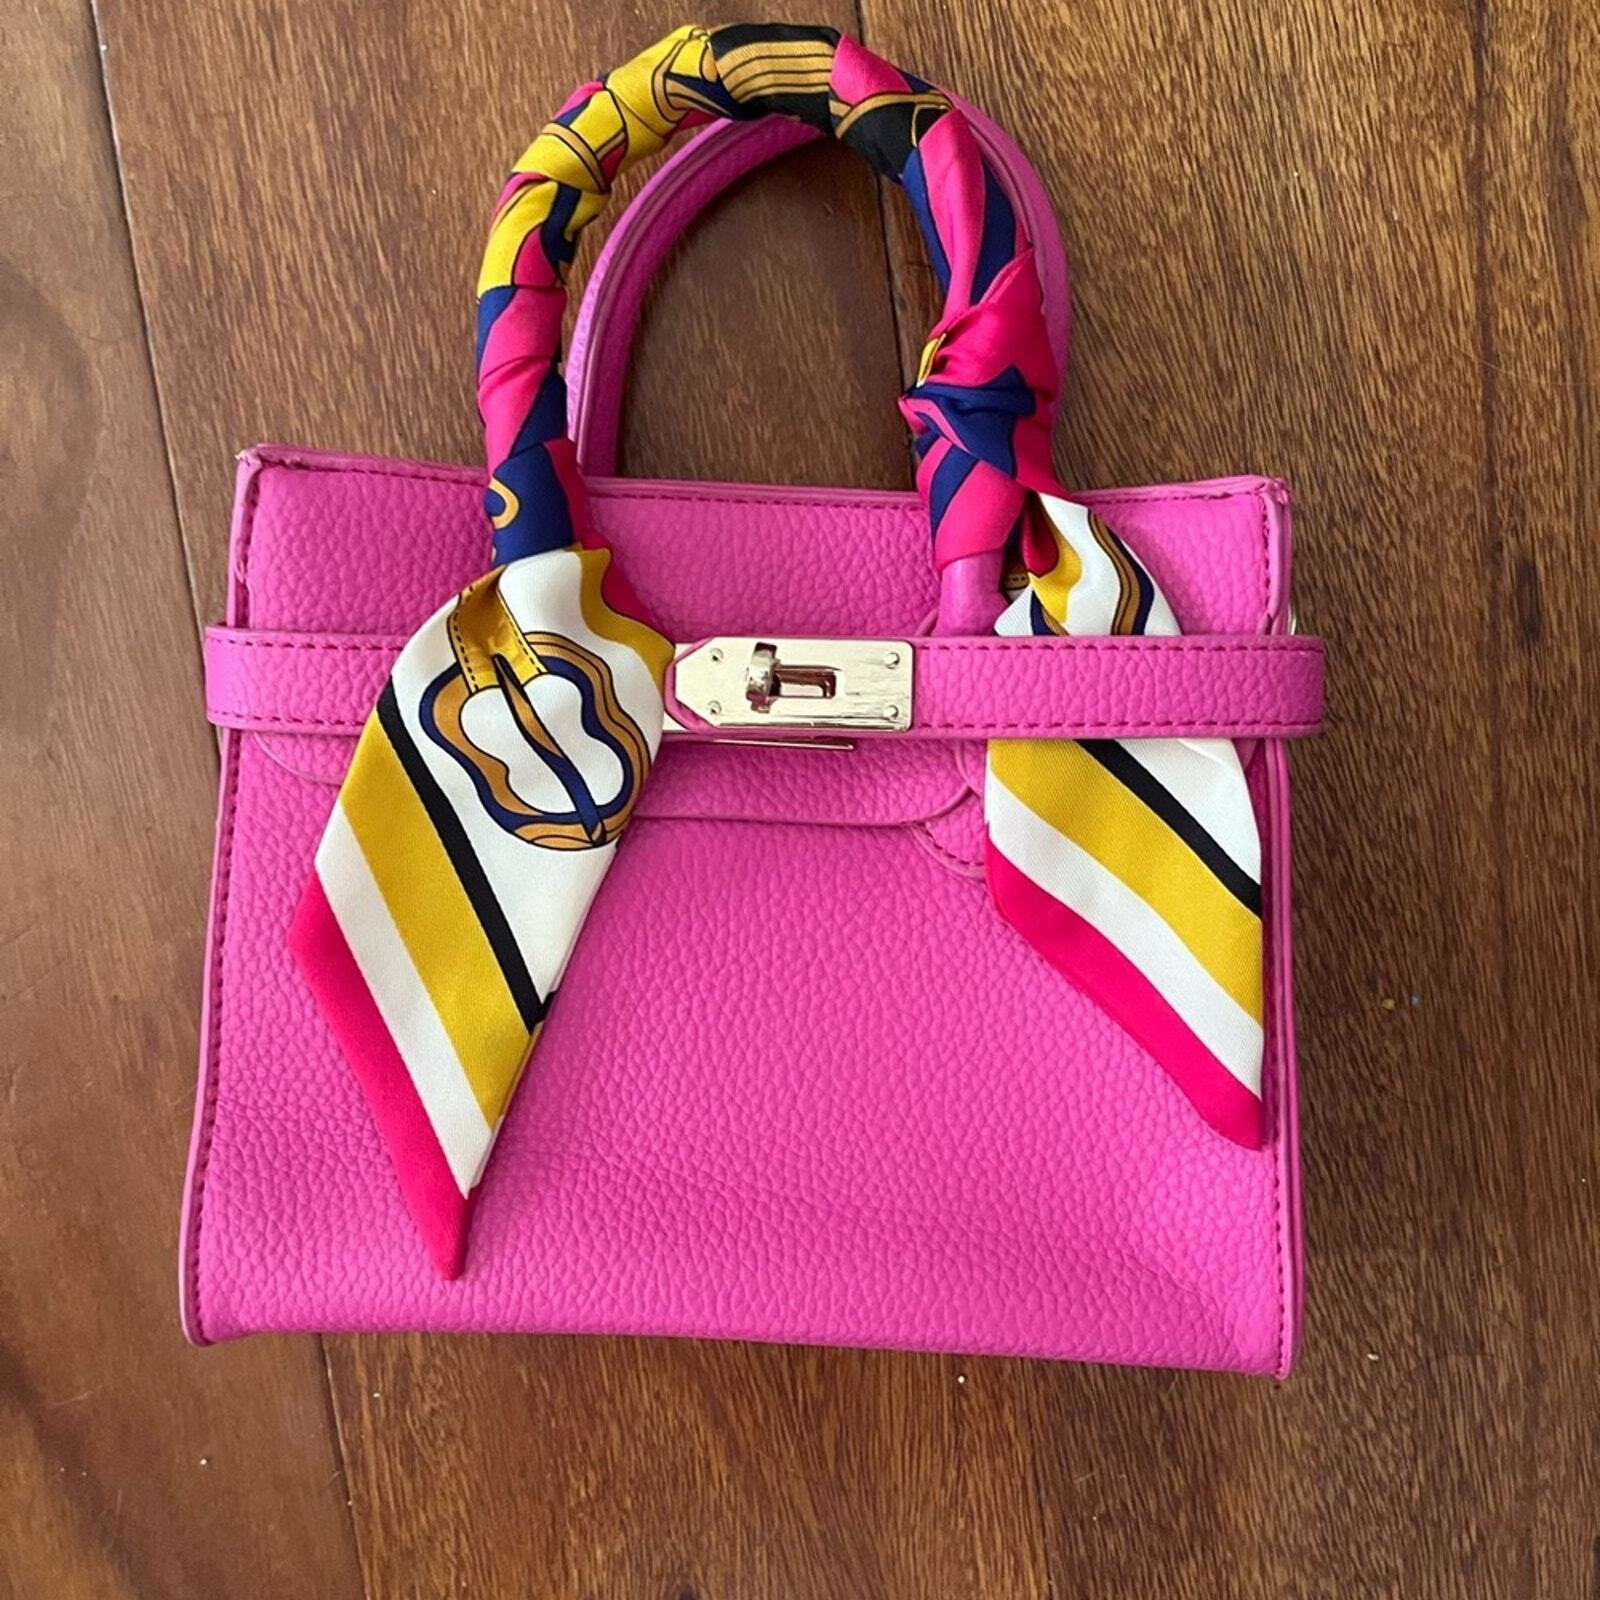 Chloe K pink Handbag